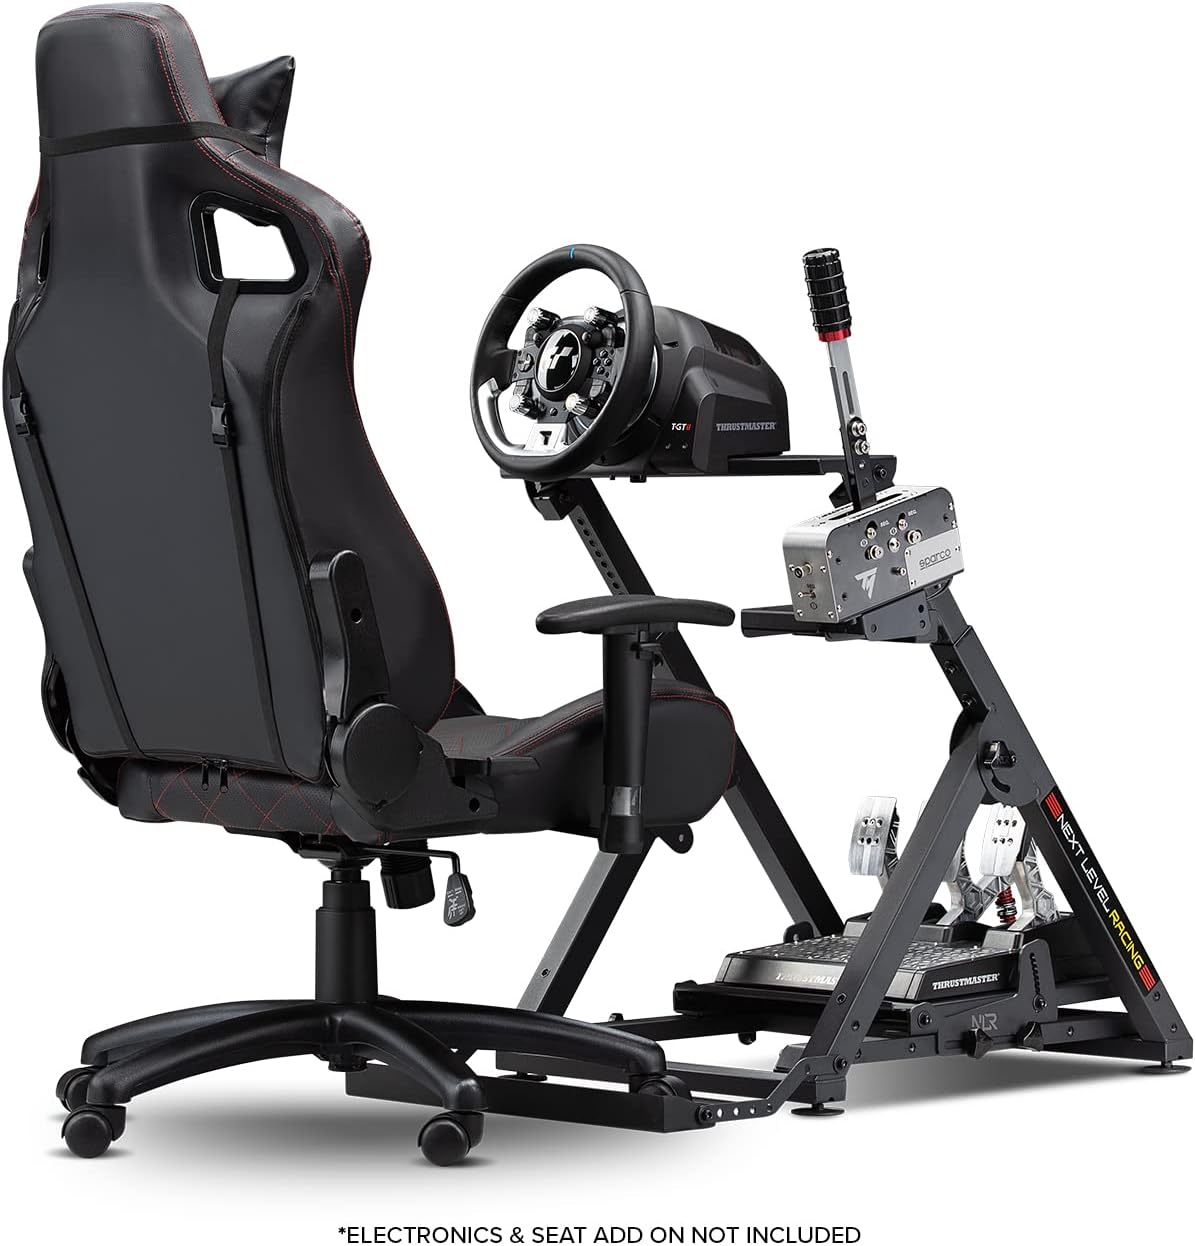 Next Level Racing Wheel Stand 2.0, Desks & Chairs, Maplin